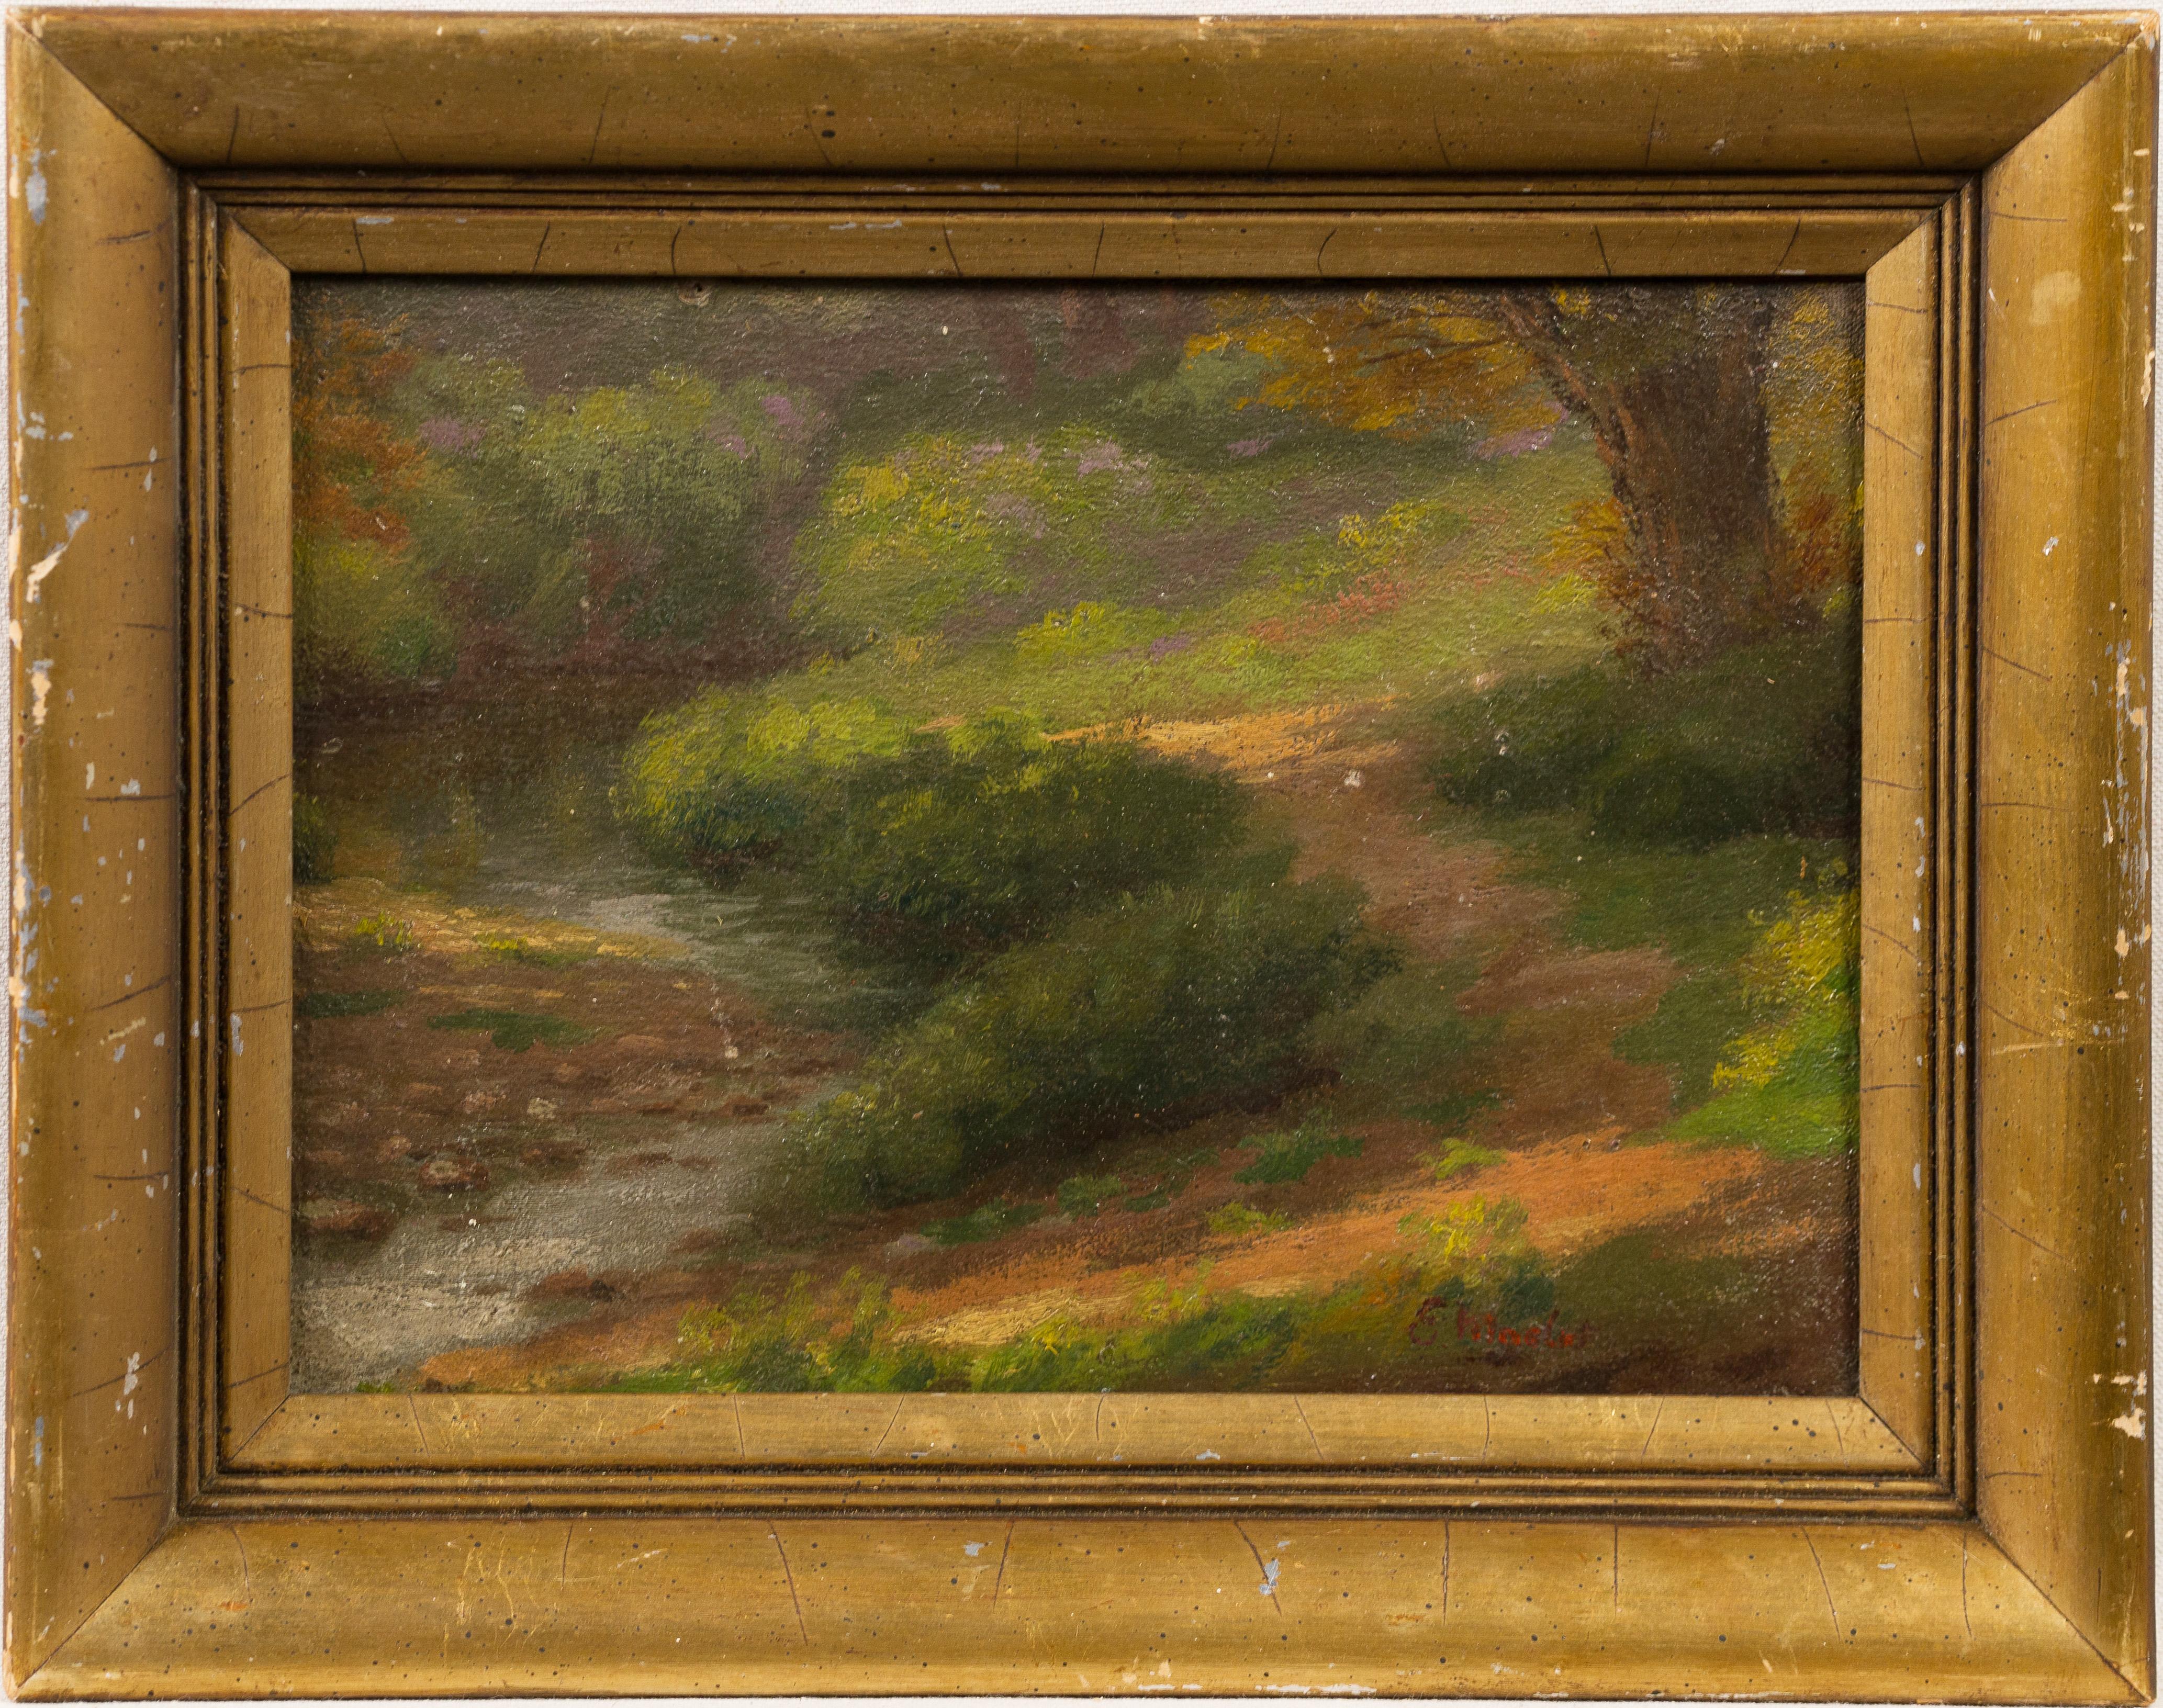 Antique American impressionist landscape oil painting.  Oil on canvasboard.  Framed.  Signed.